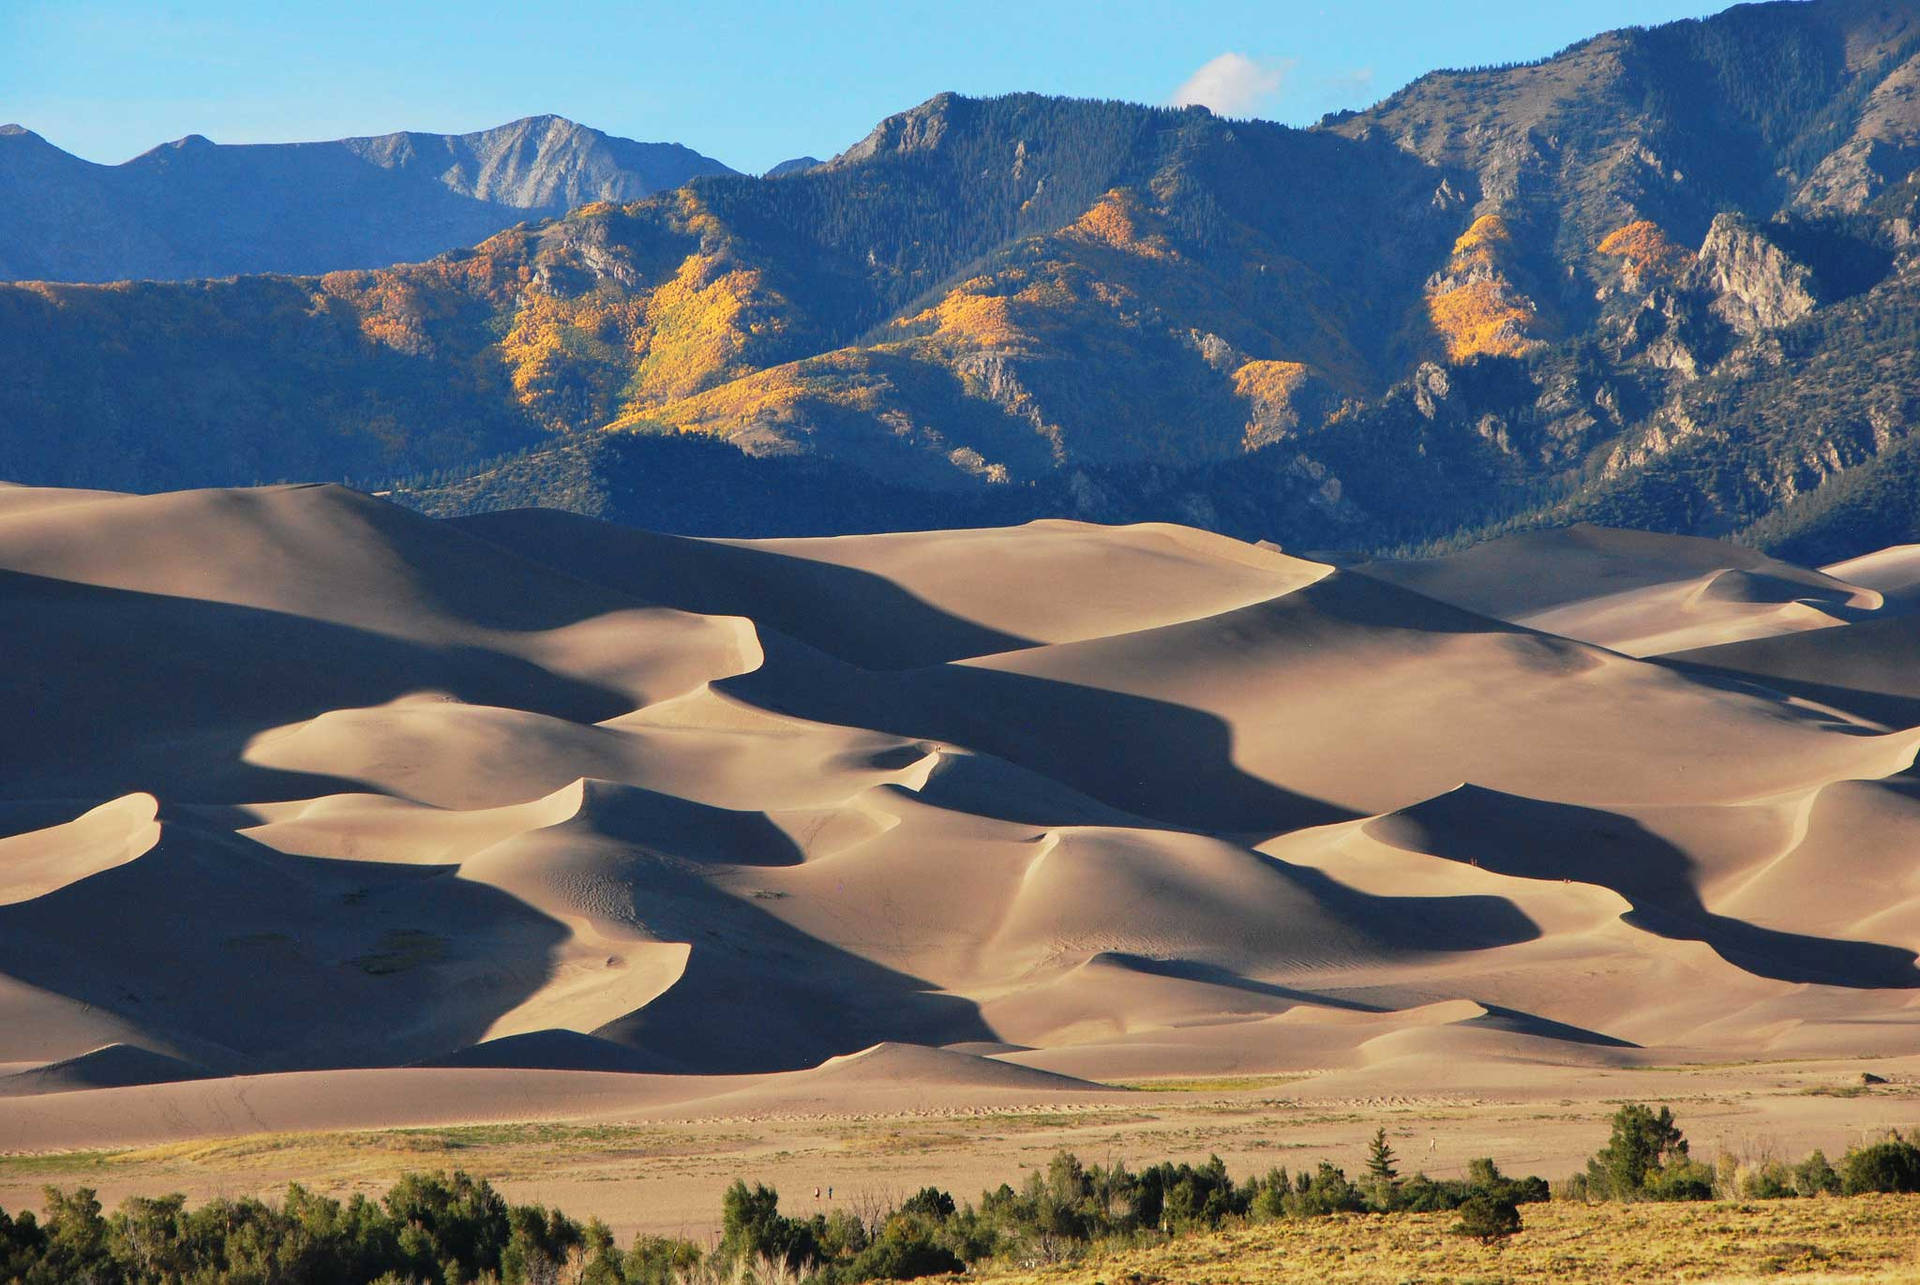 Colorado's Great Sand Dunes Park